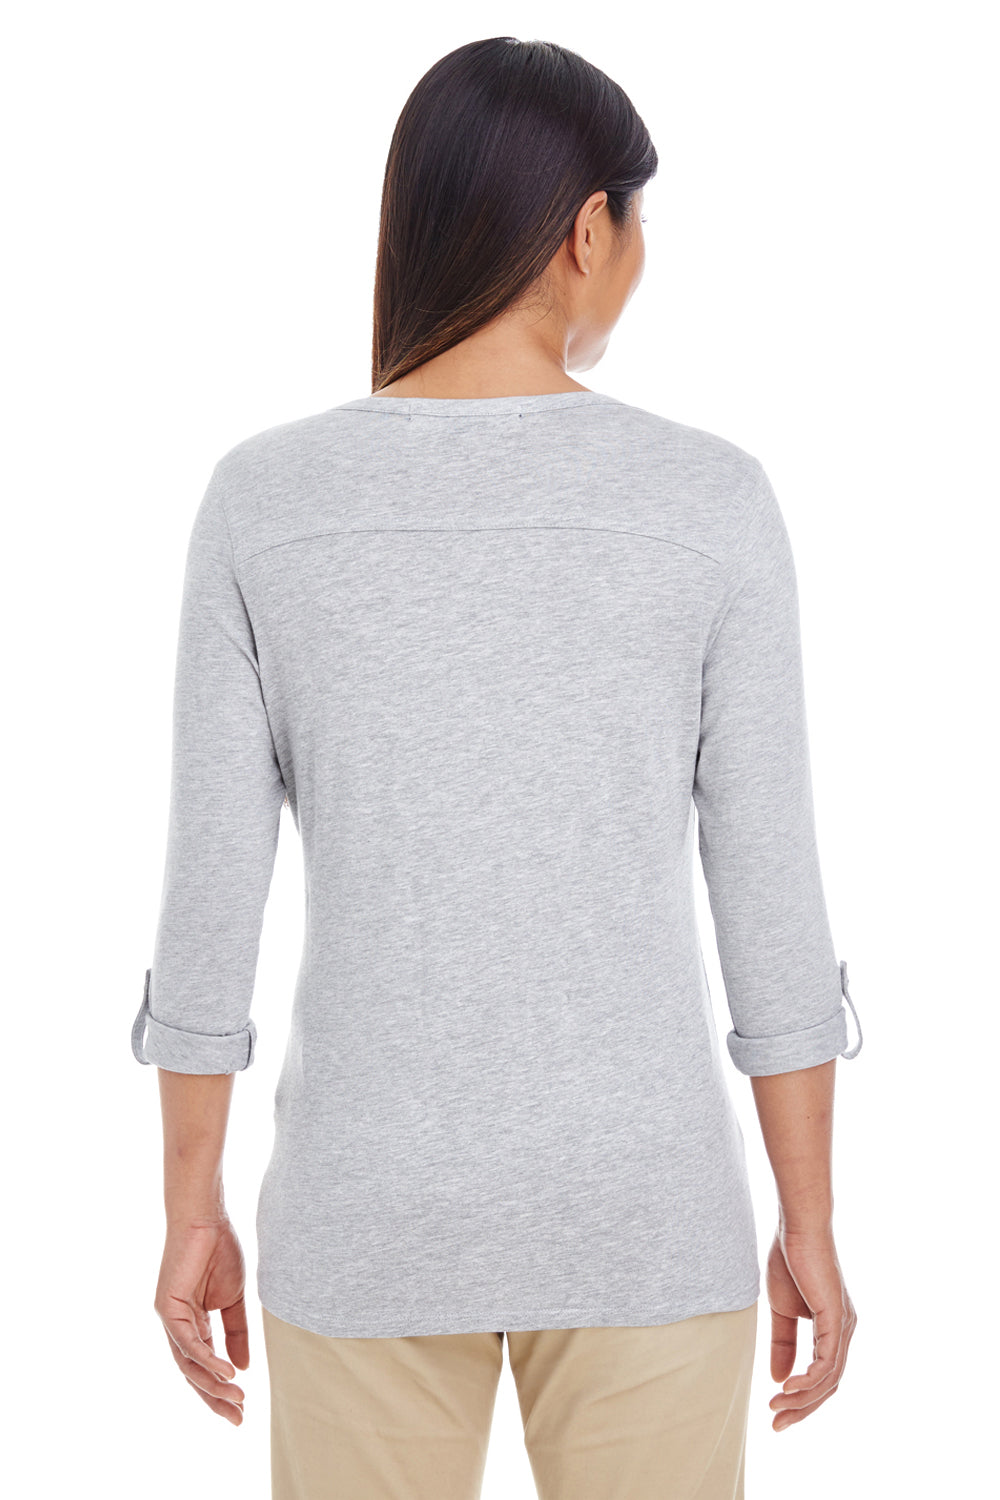 Devon & Jones DP186W Womens Perfect Fit Long Sleeve V-Neck T-Shirt Heather Grey Back